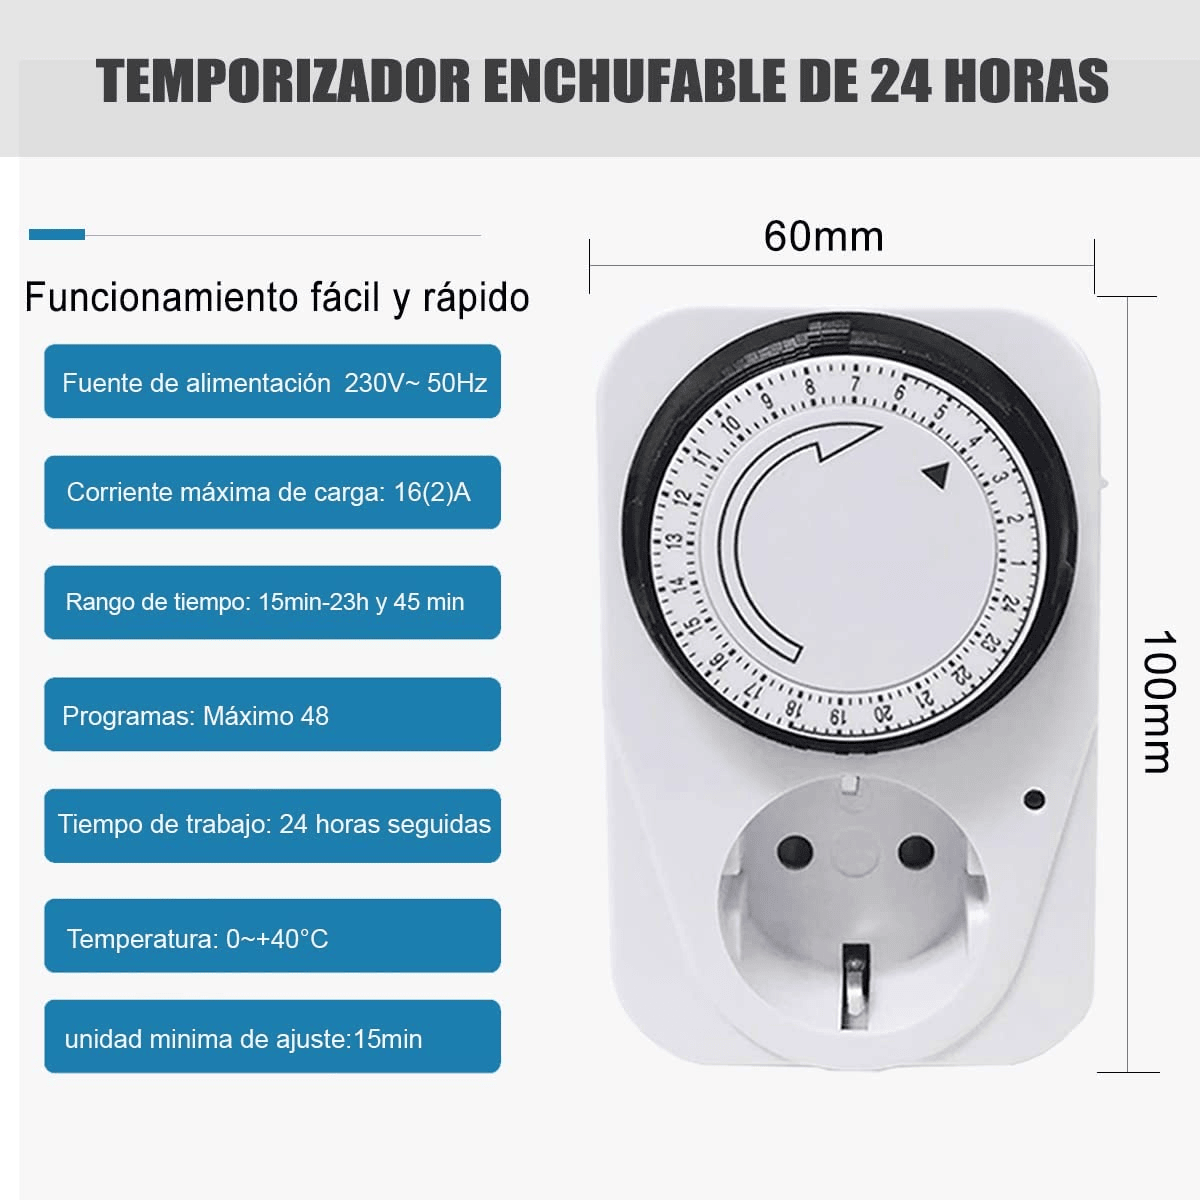 Un reloj temporizador de cocina establecido durante un período de